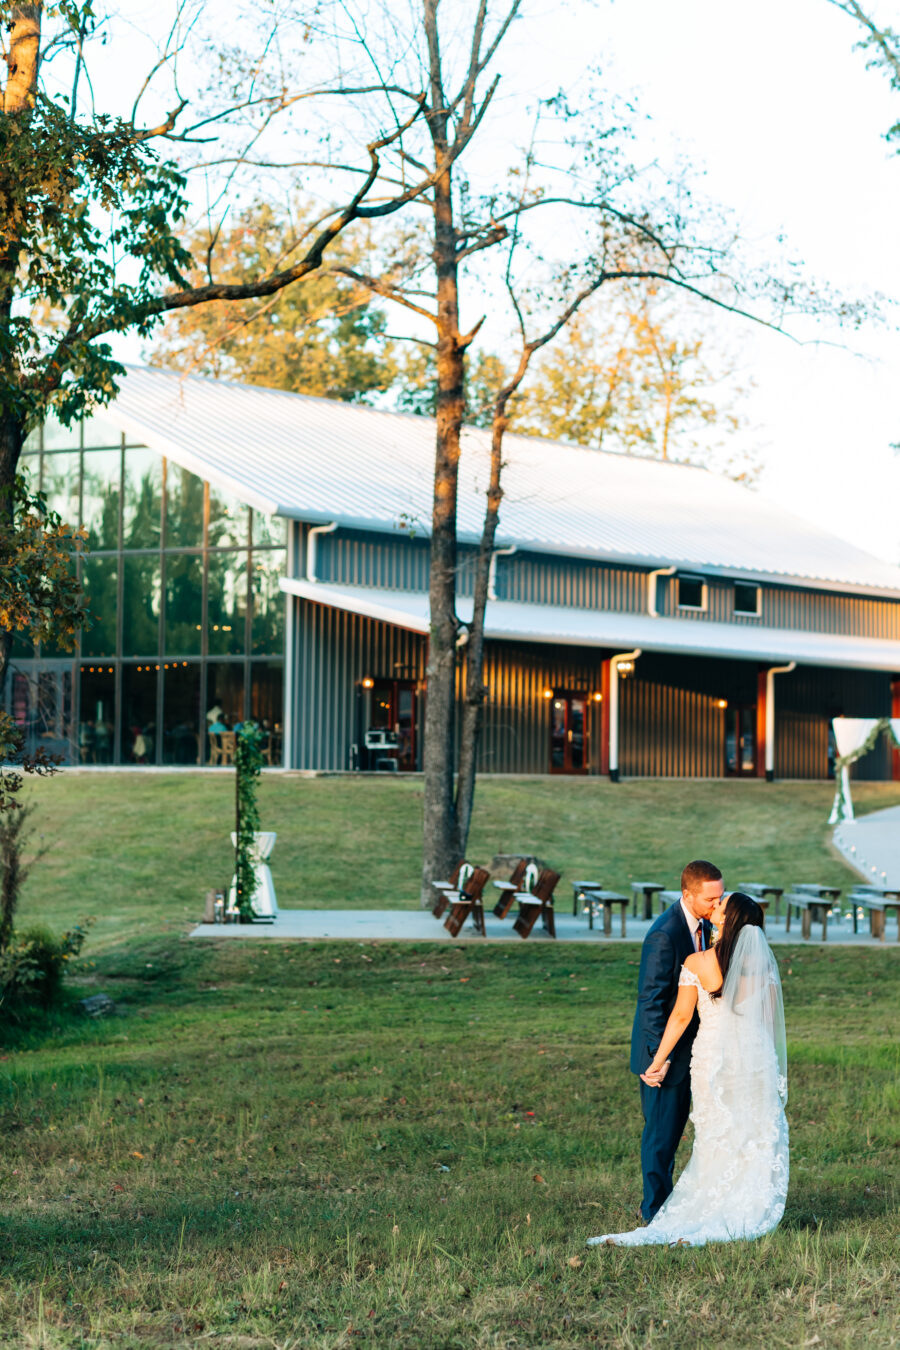 Meet Burdoc Farms featured on Nashville Bride Guide